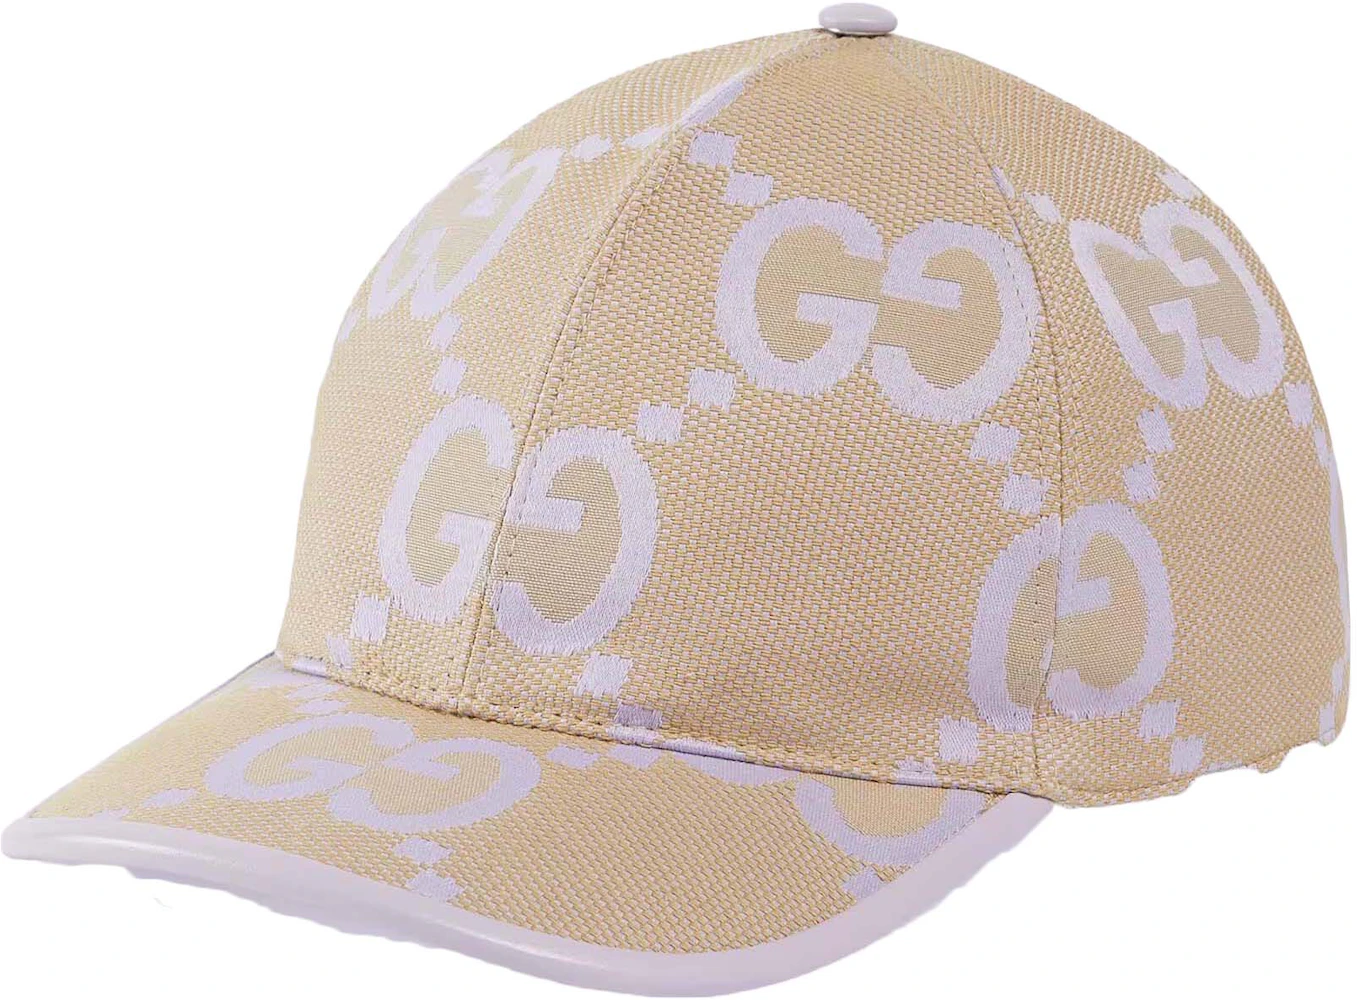 Gucci Maxi Gg-supreme Canvas Bucket Hat - Brown, Beige